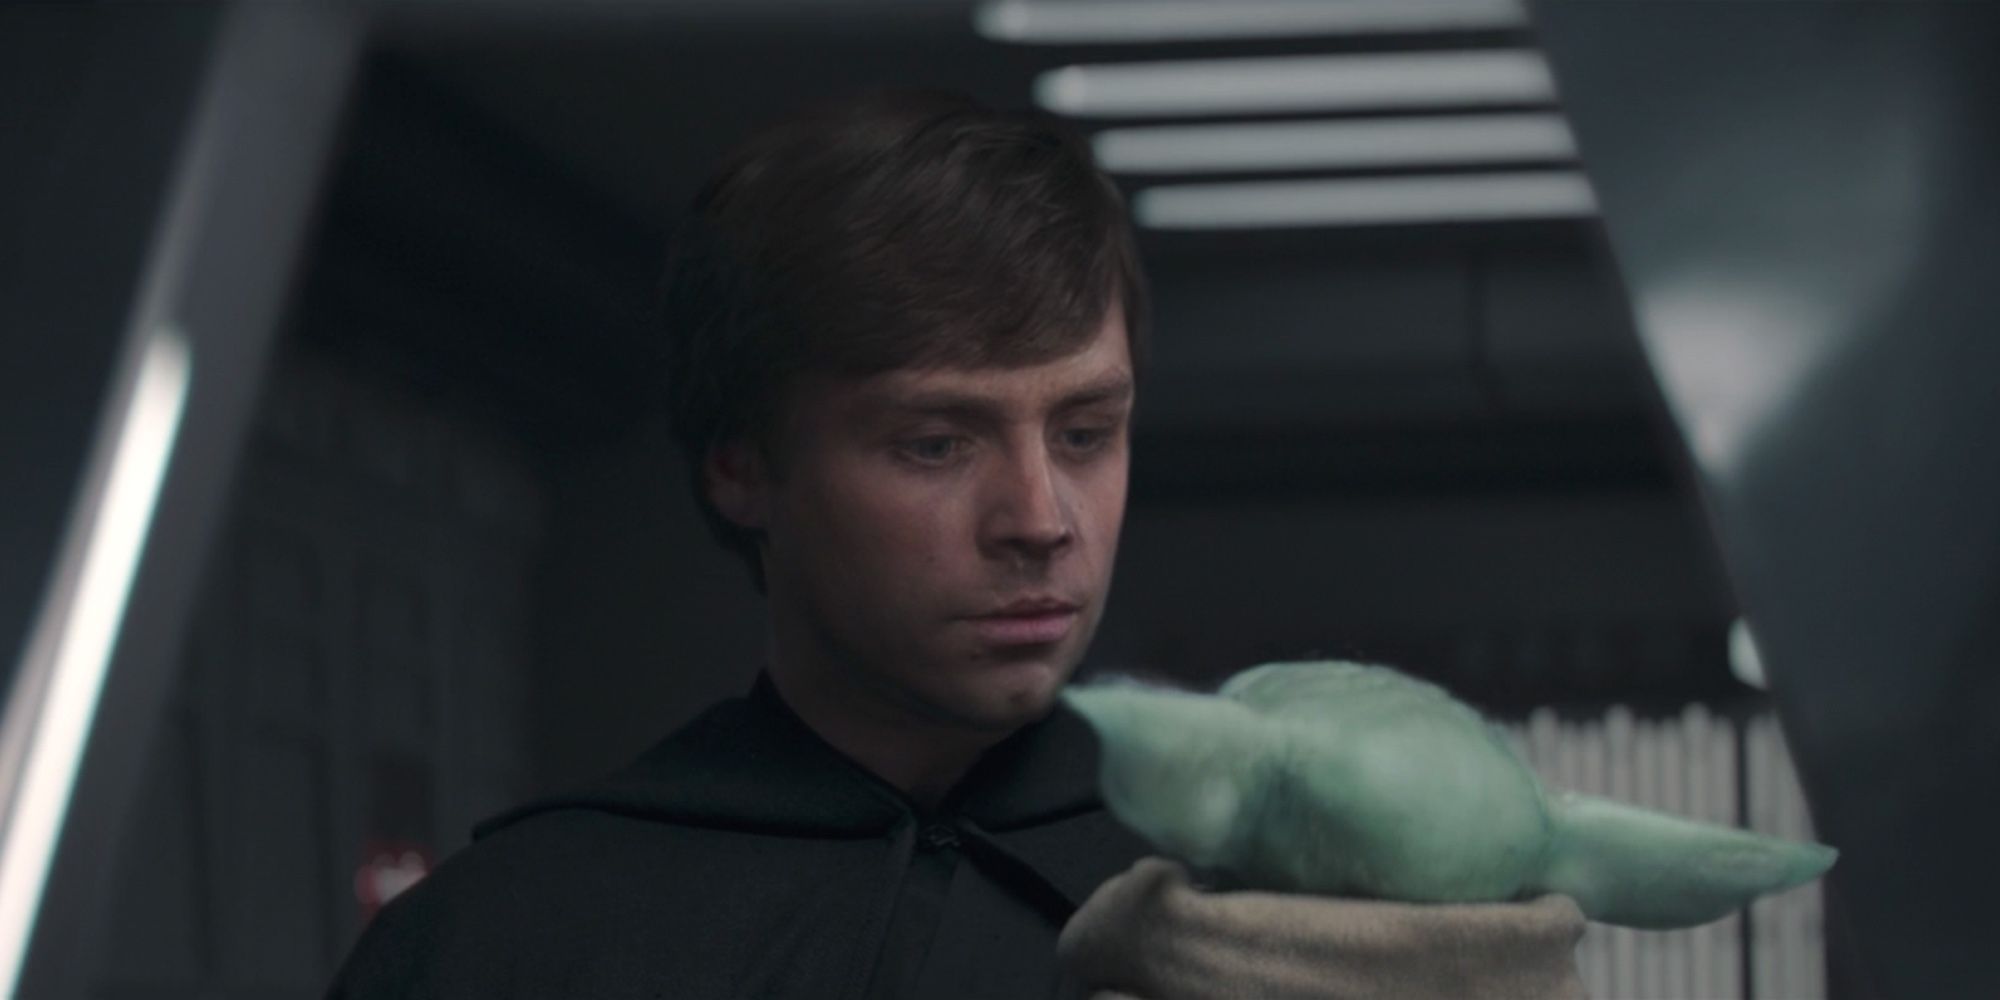 Luke Skywalker With Baby Yoda in The Mandalorian